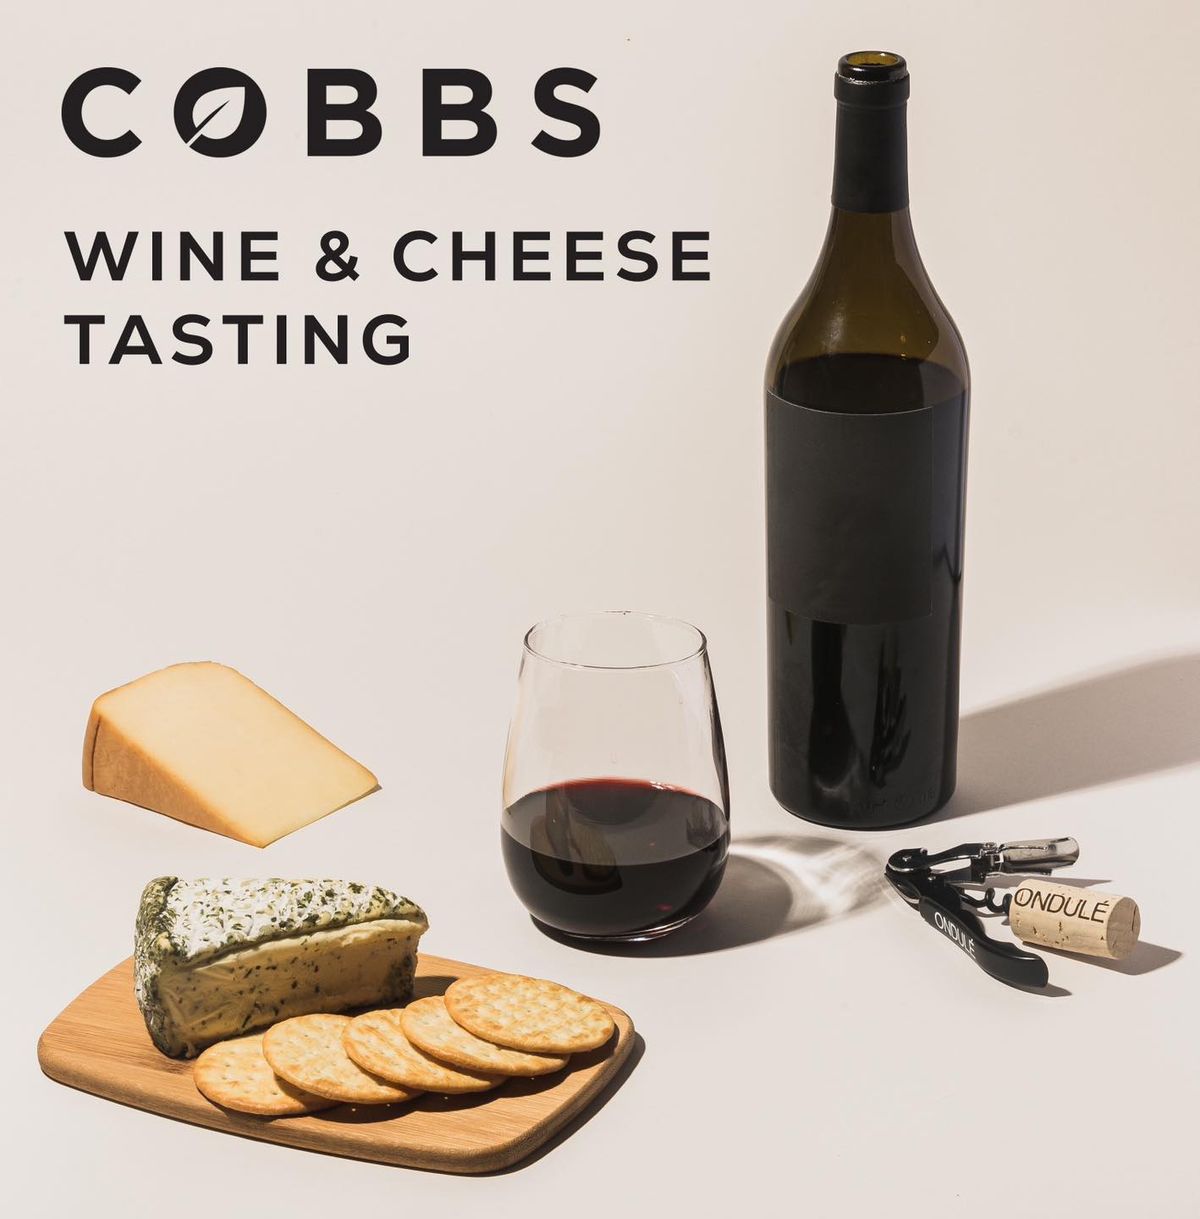 Wine & Cheese Tasting evening